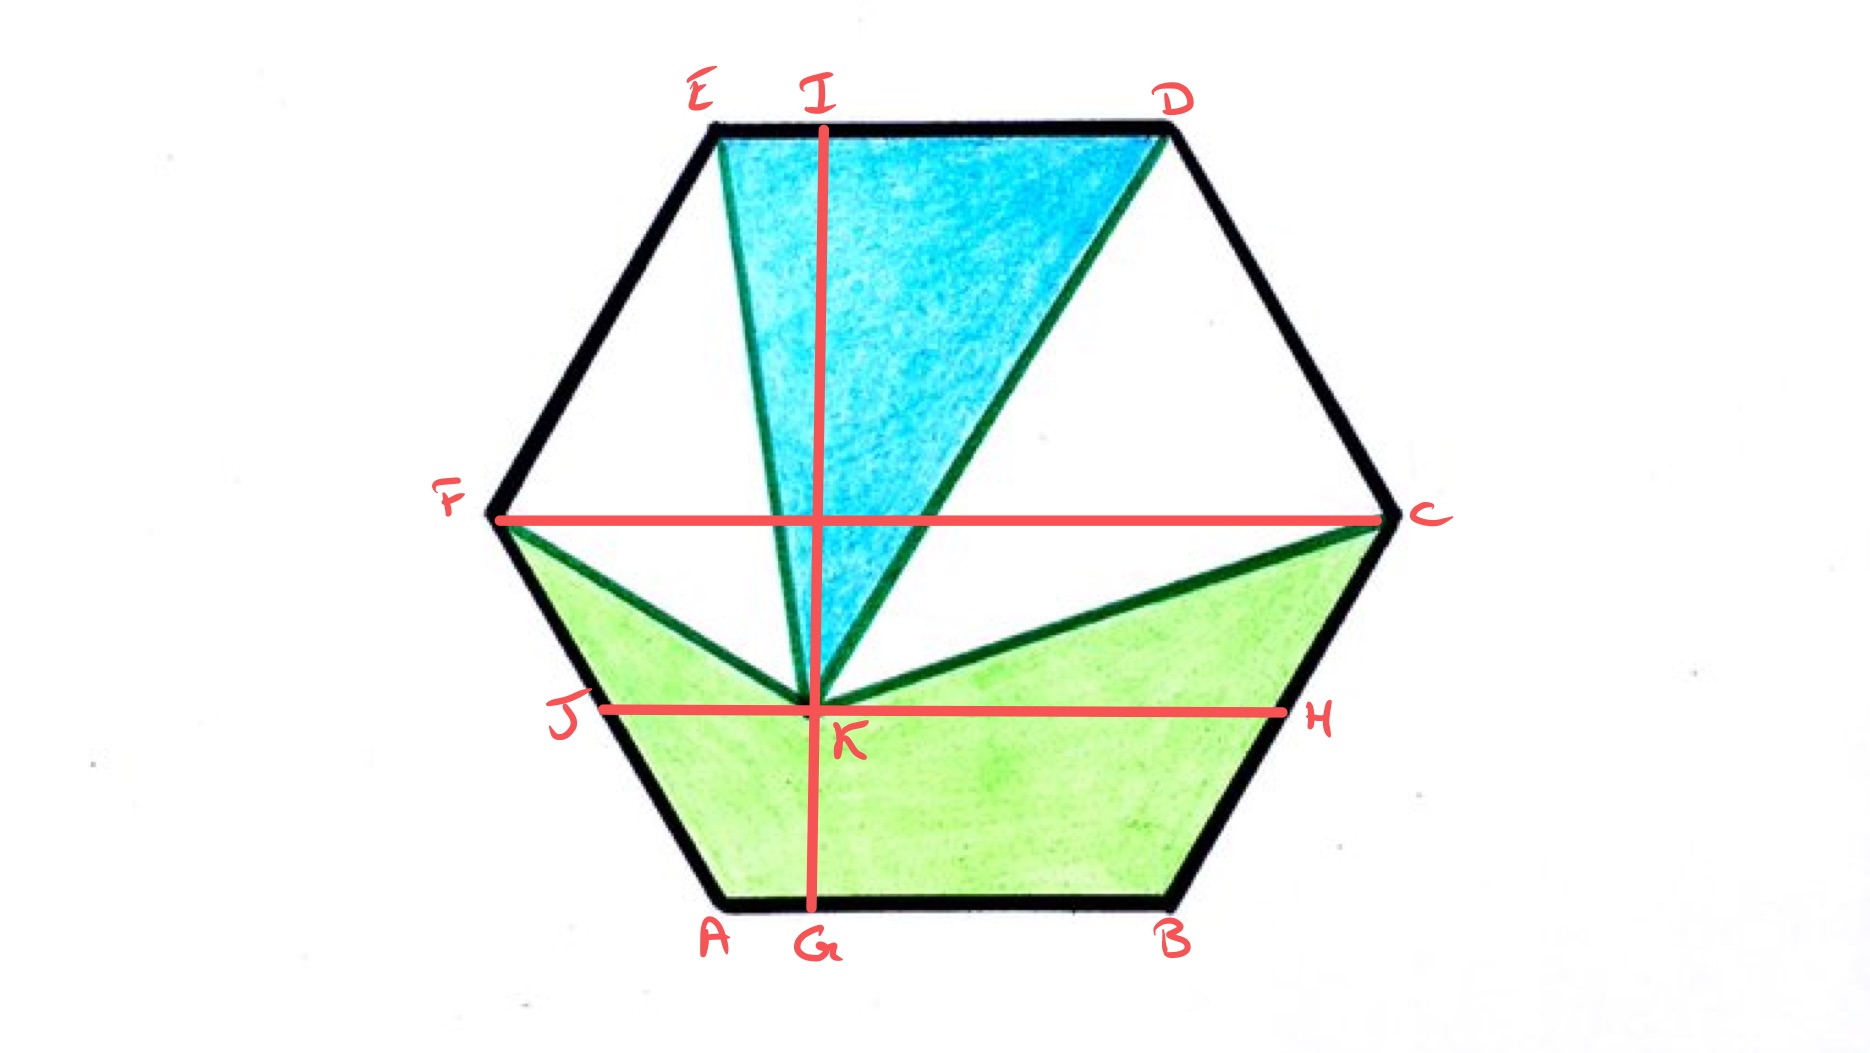 Quartered hexagon labelled